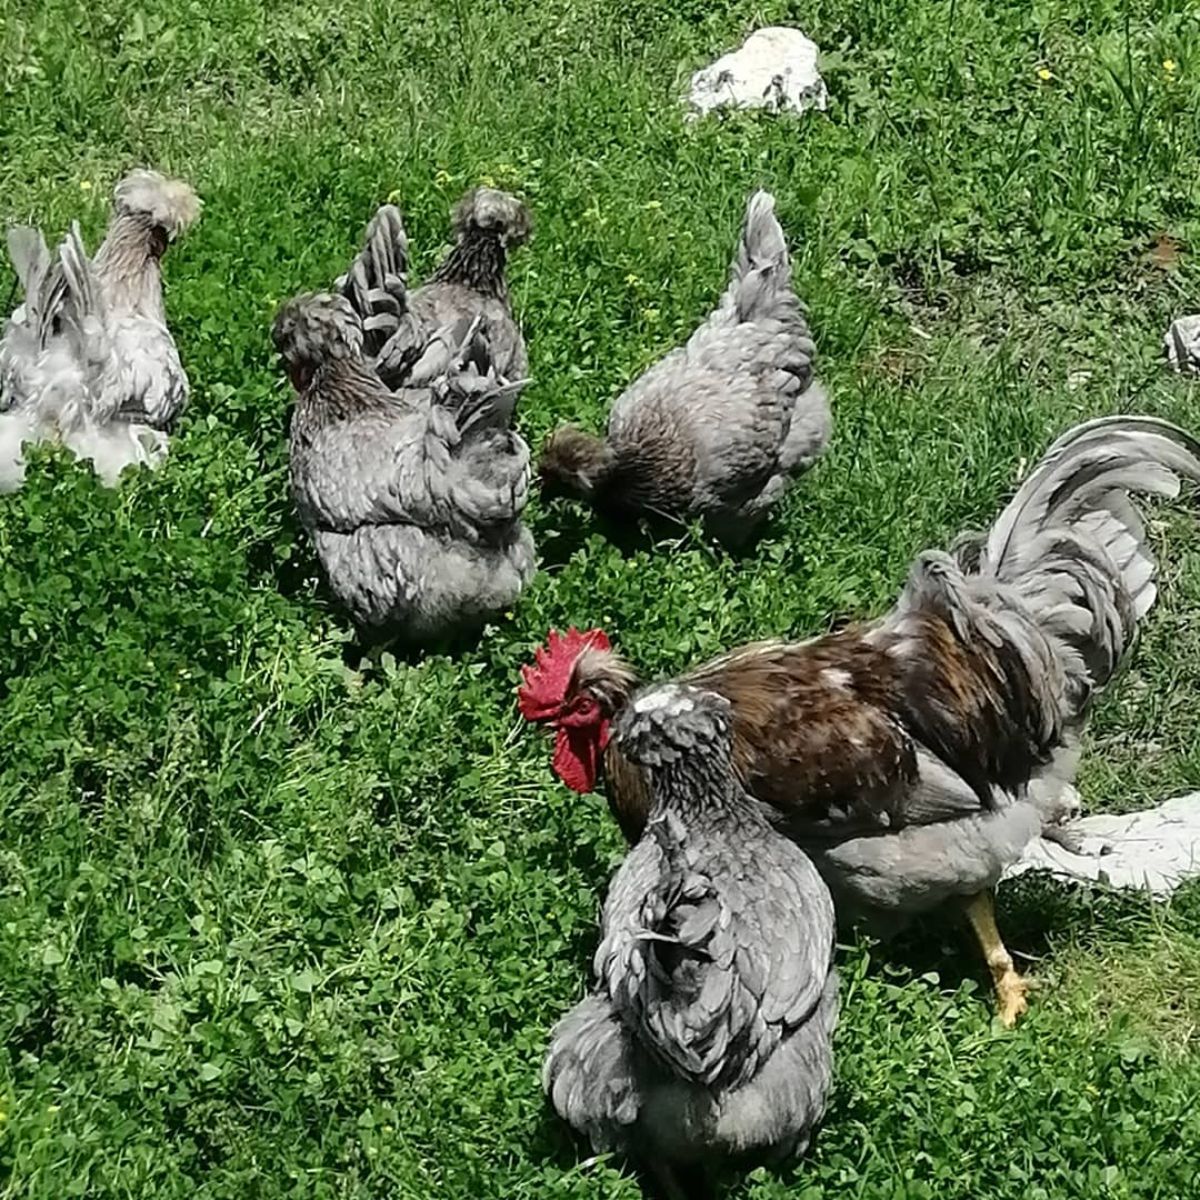 A Sombor Kaporka Chicken flock in a backyard.